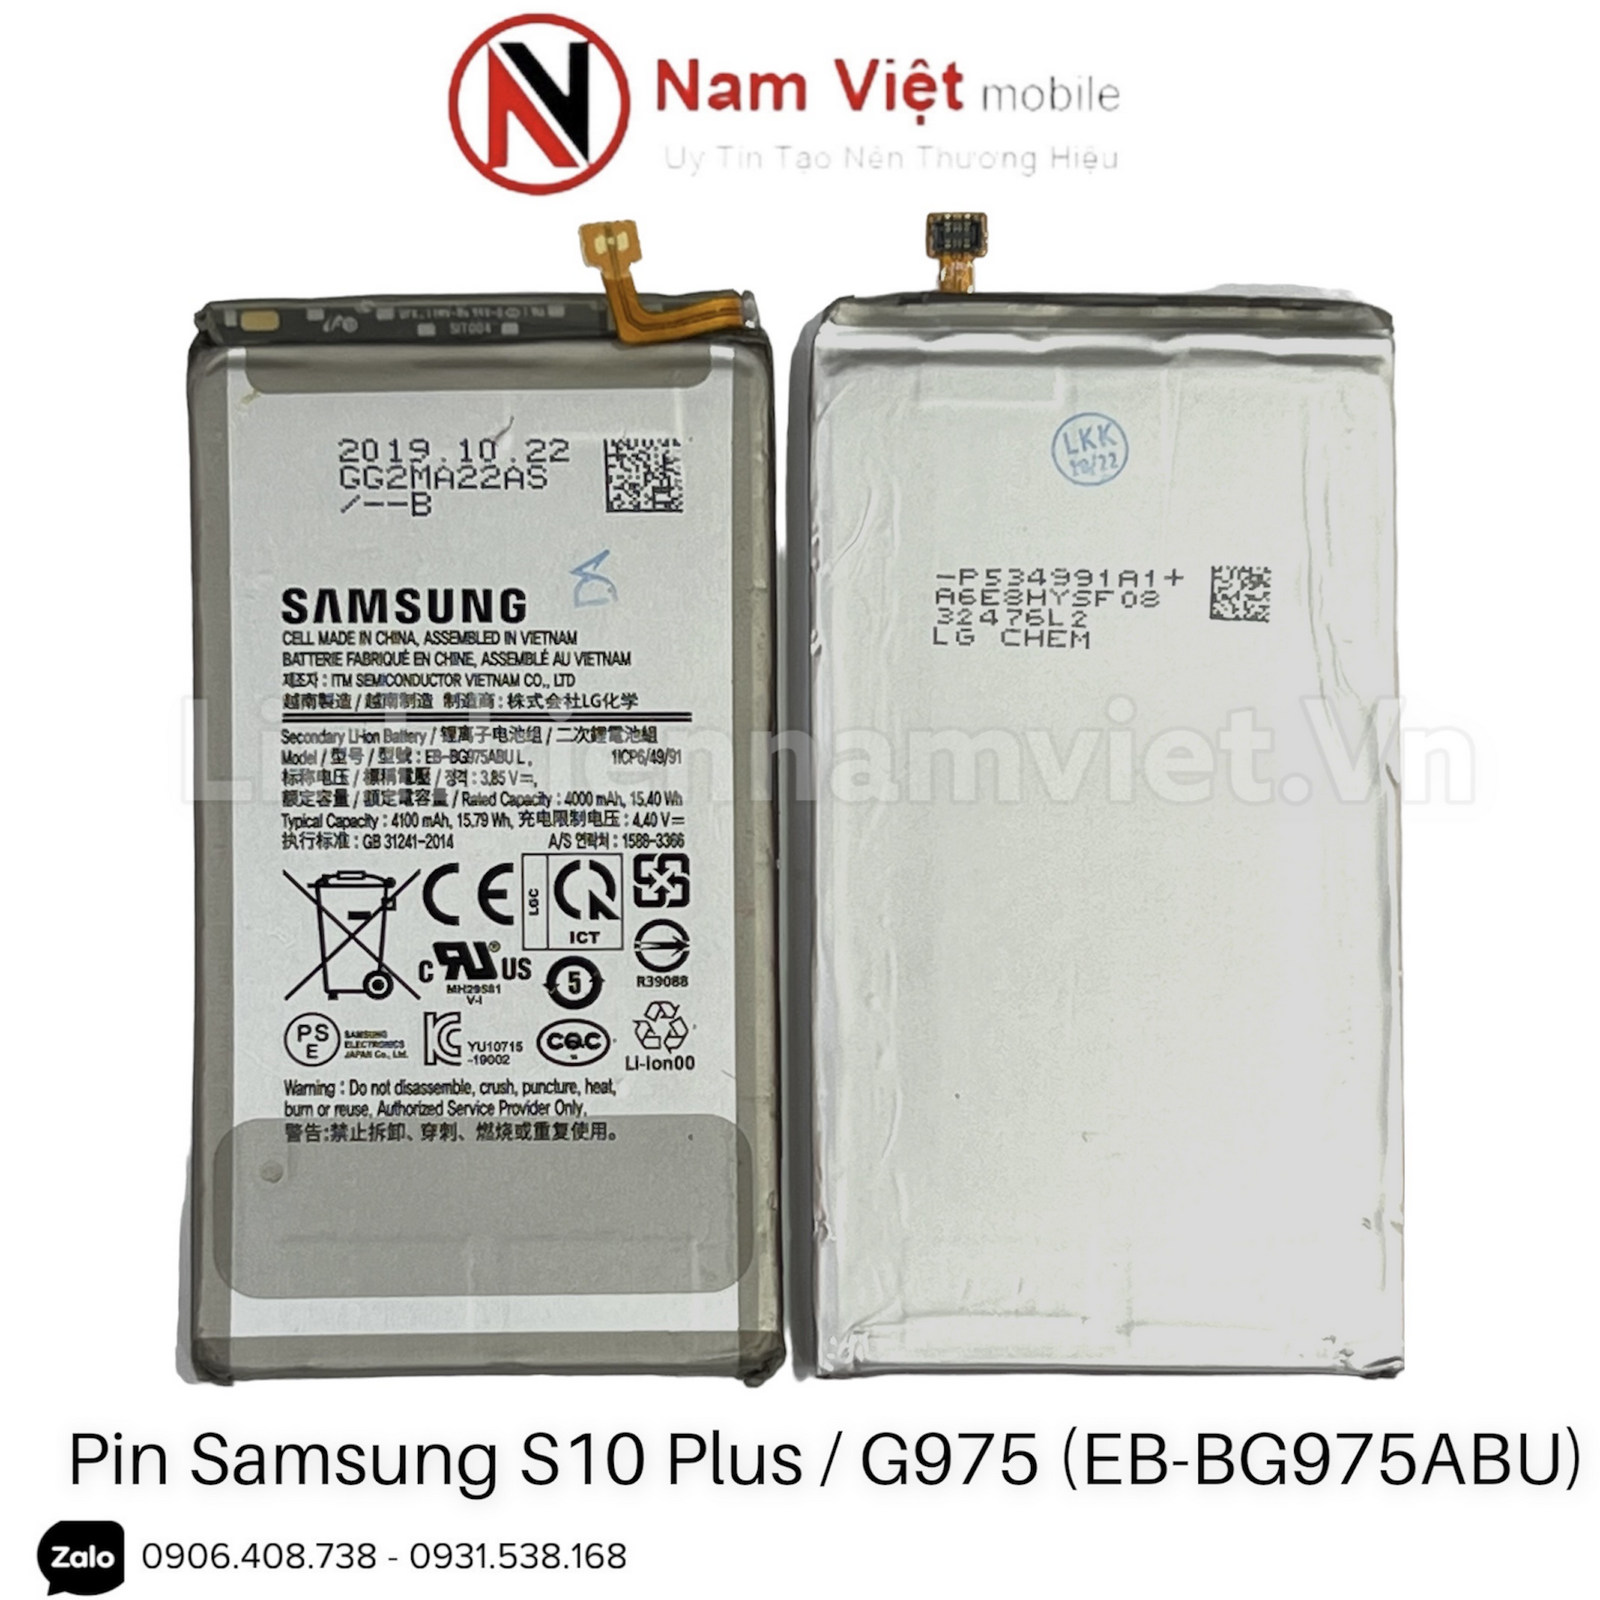 Pin Samsung S10 Plus.